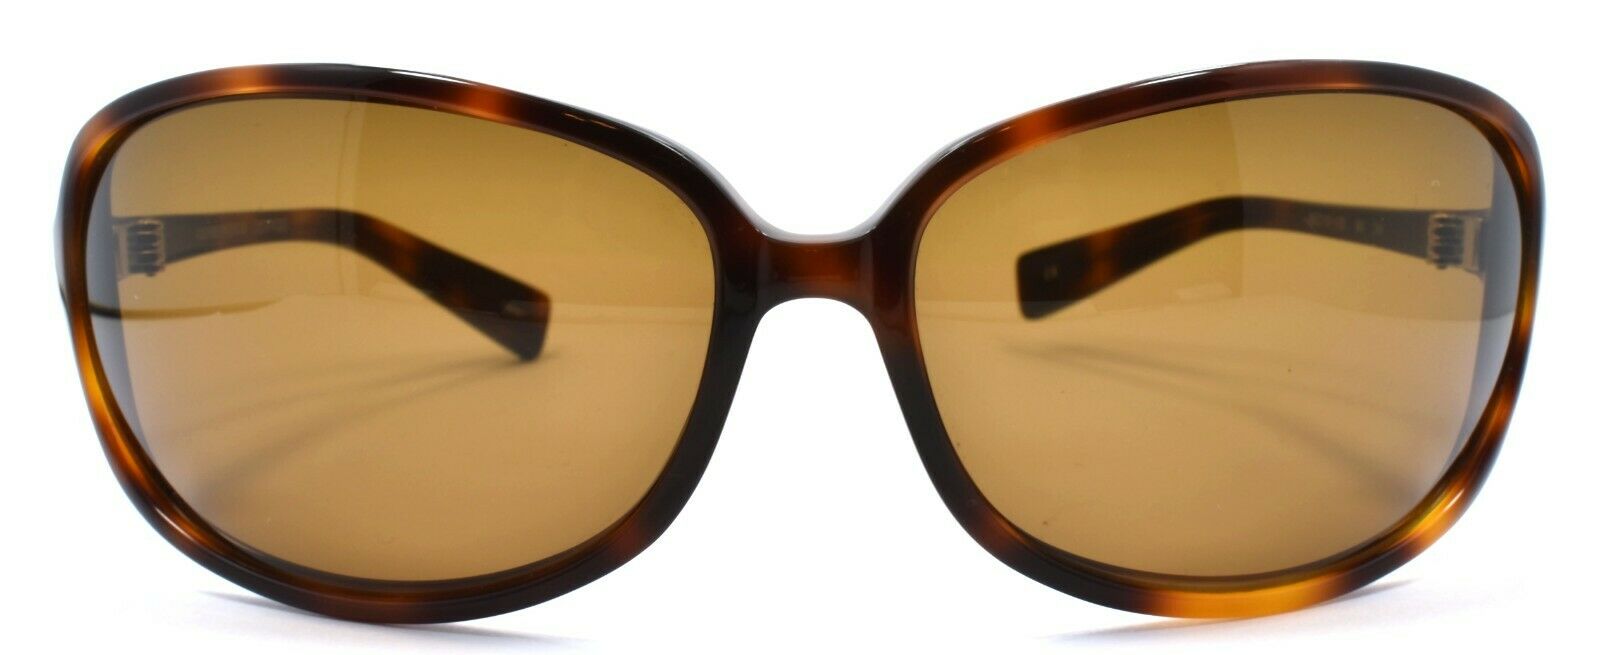 2-Oliver Peoples BB DM Women's Sunglasses Dark Mahogany / Brown JAPAN-Does not apply-IKSpecs